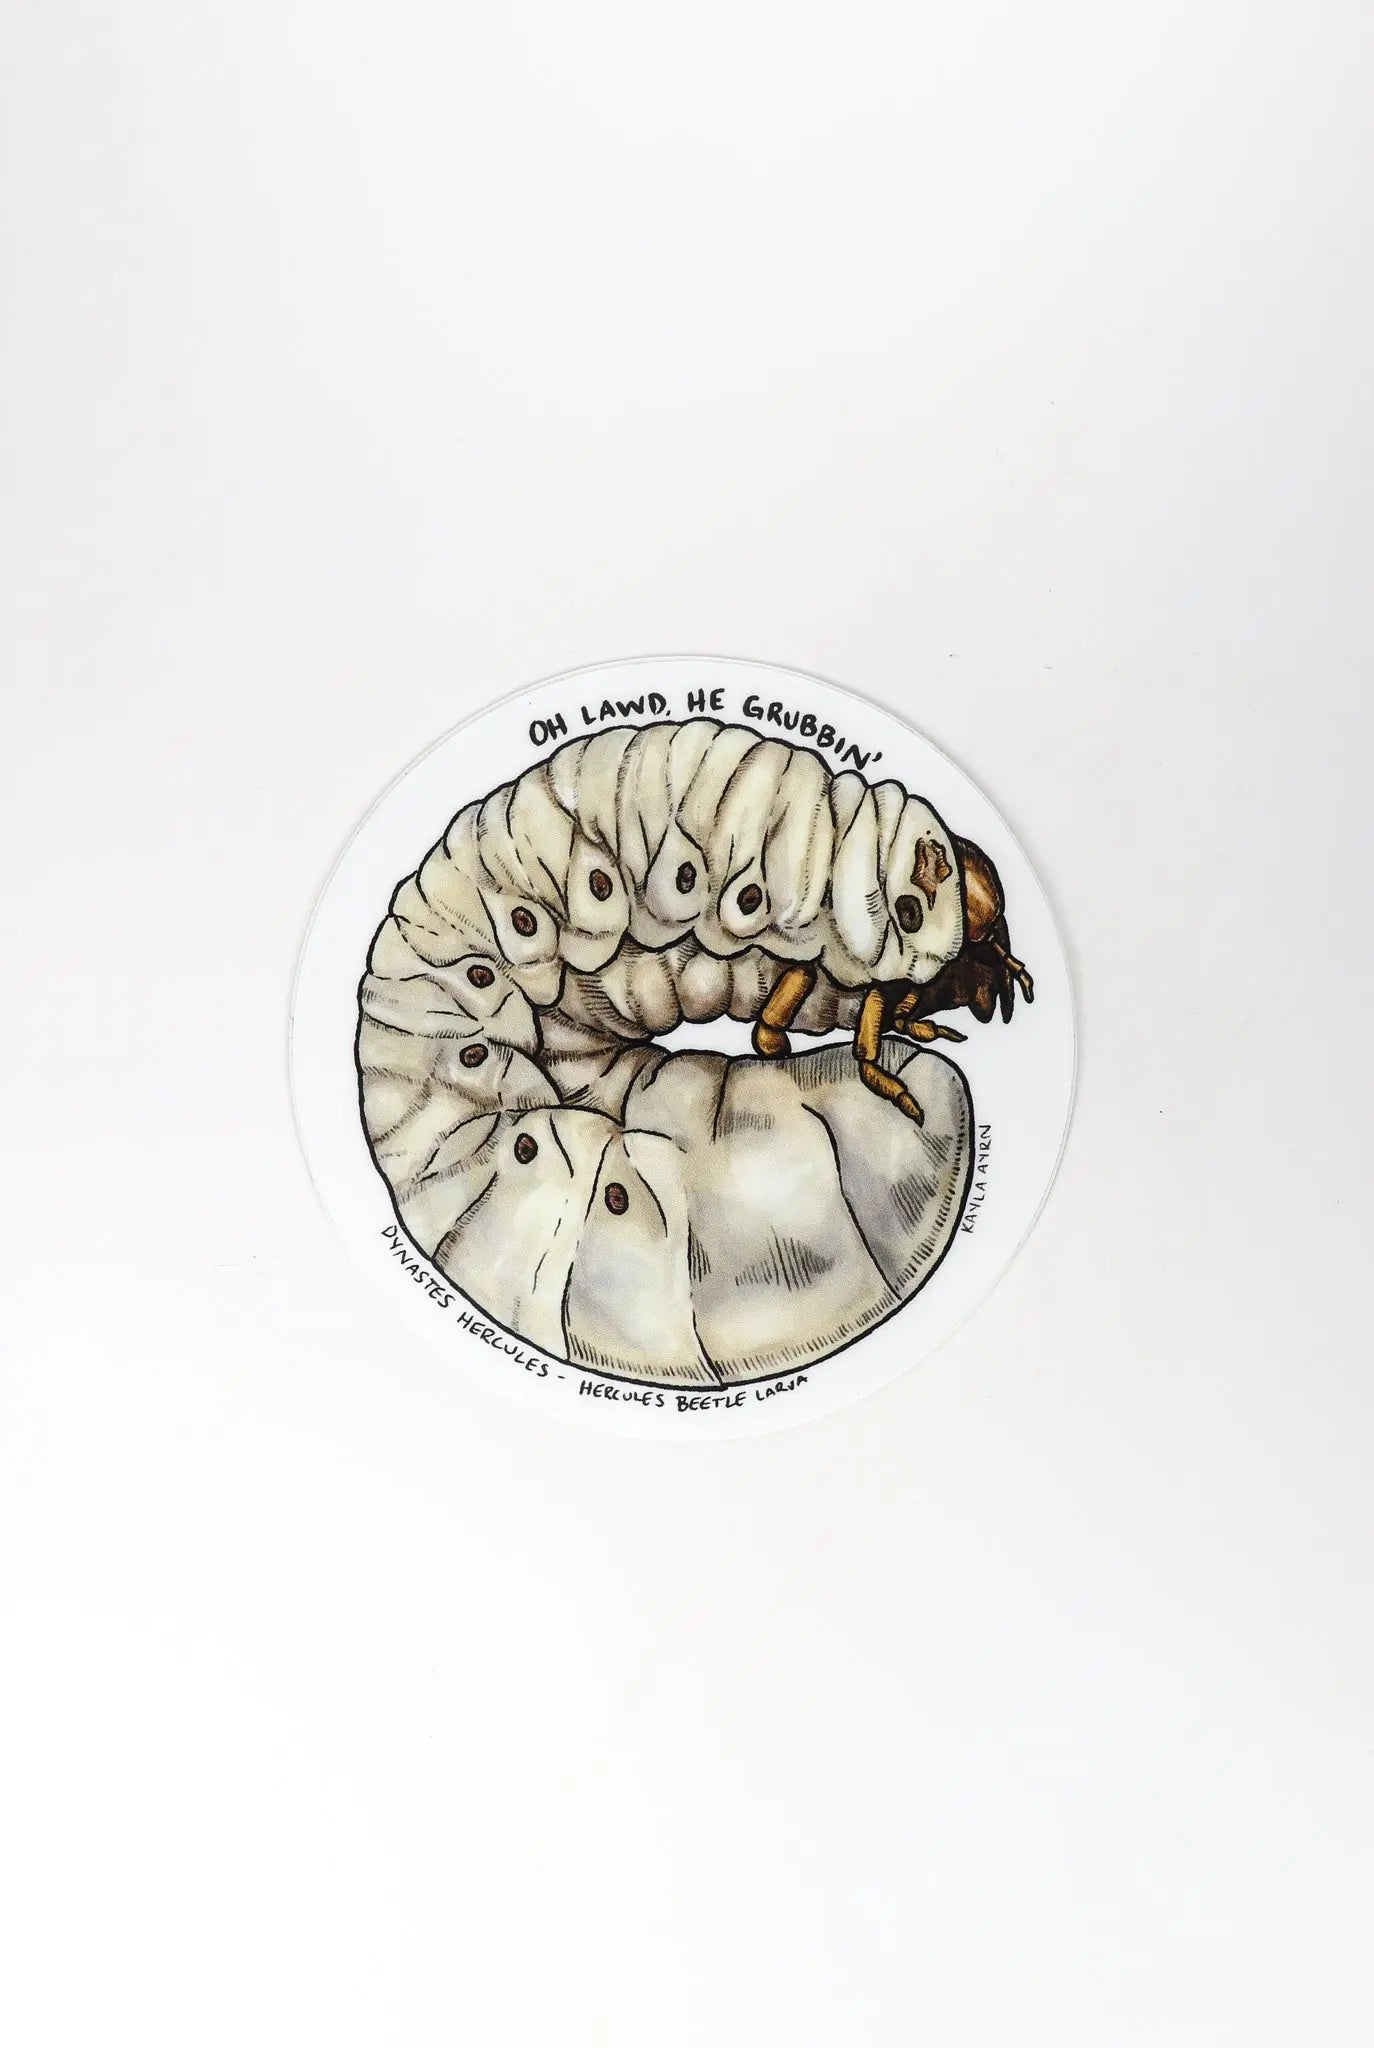 Hercules Beetle Larva Sticker - THE STEMCELL SCIENCE SHOP